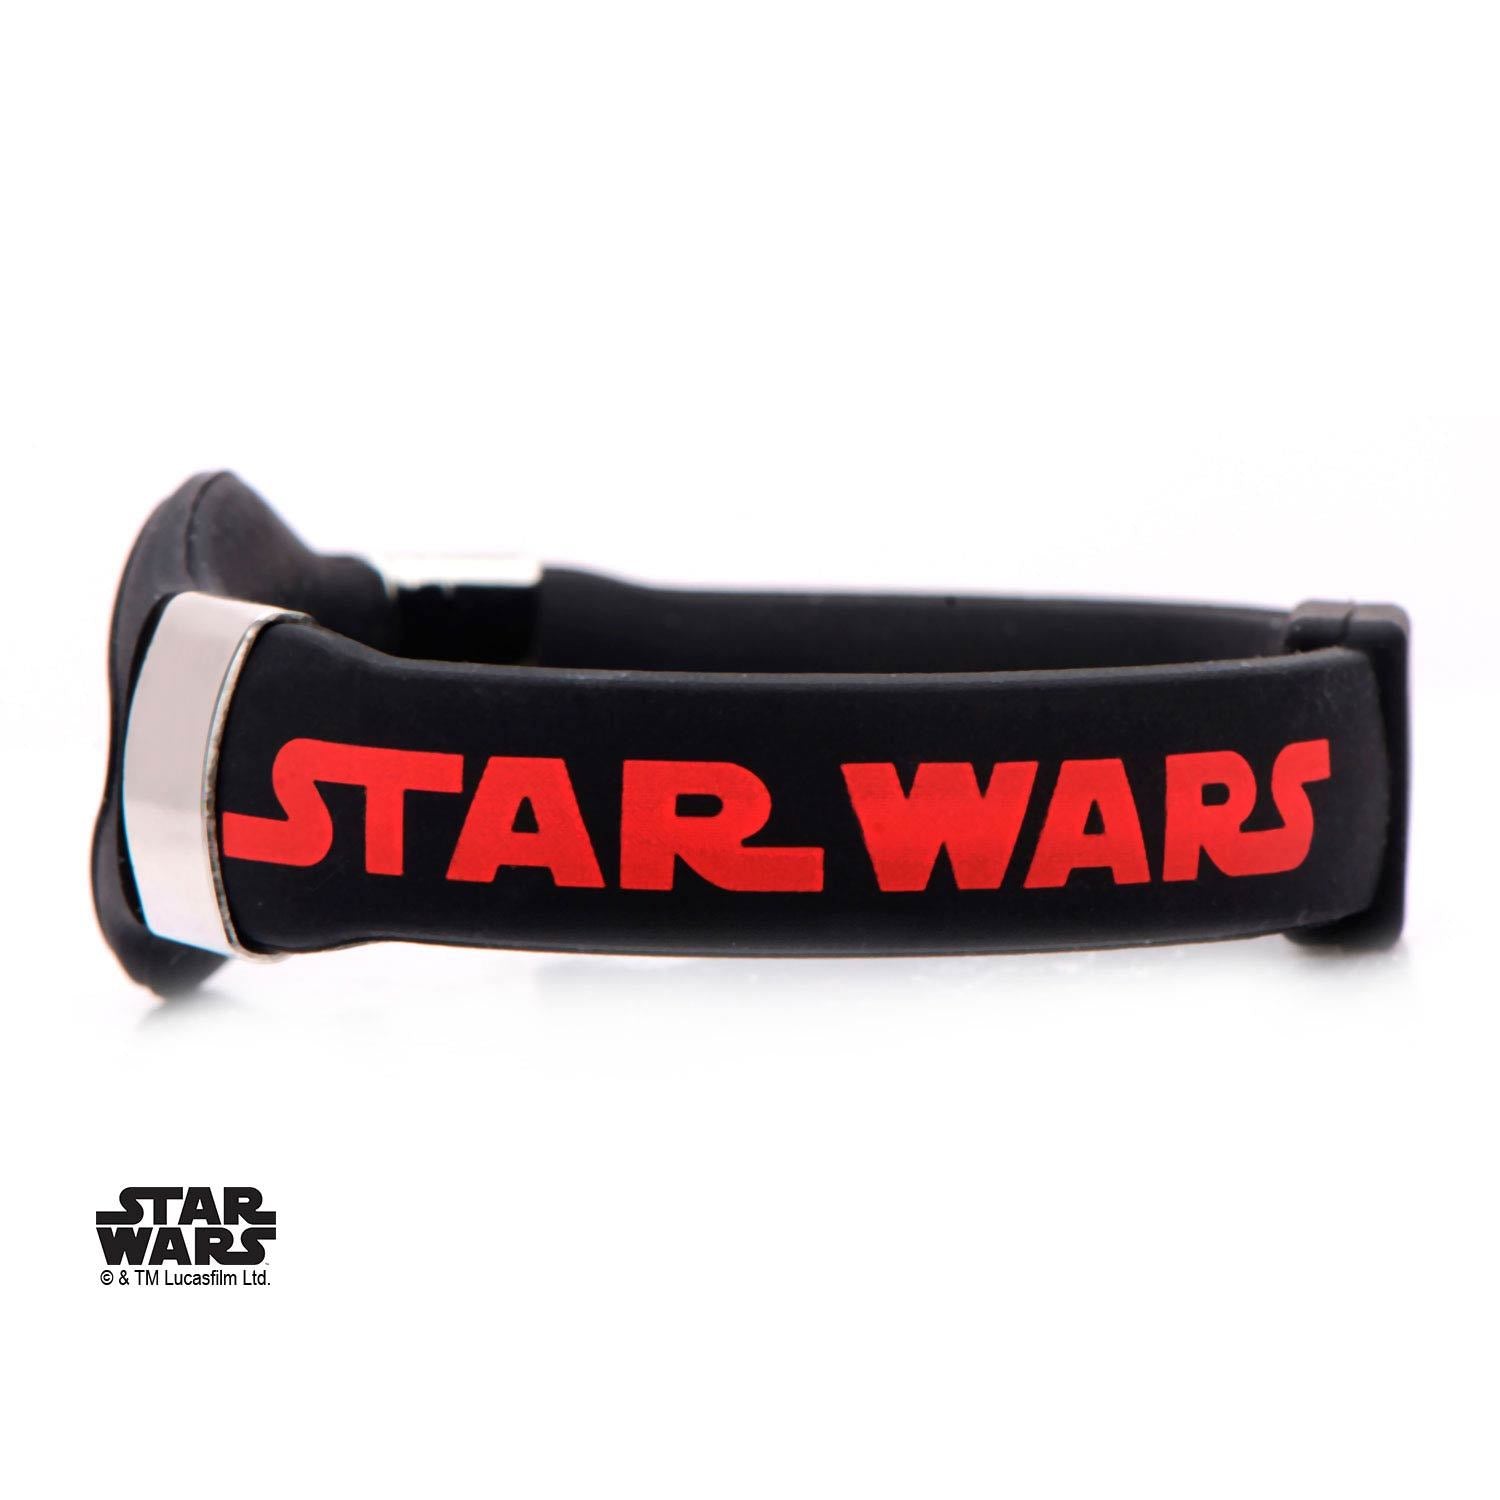 Star Wars Imperial Symbol Silicone Bracelet